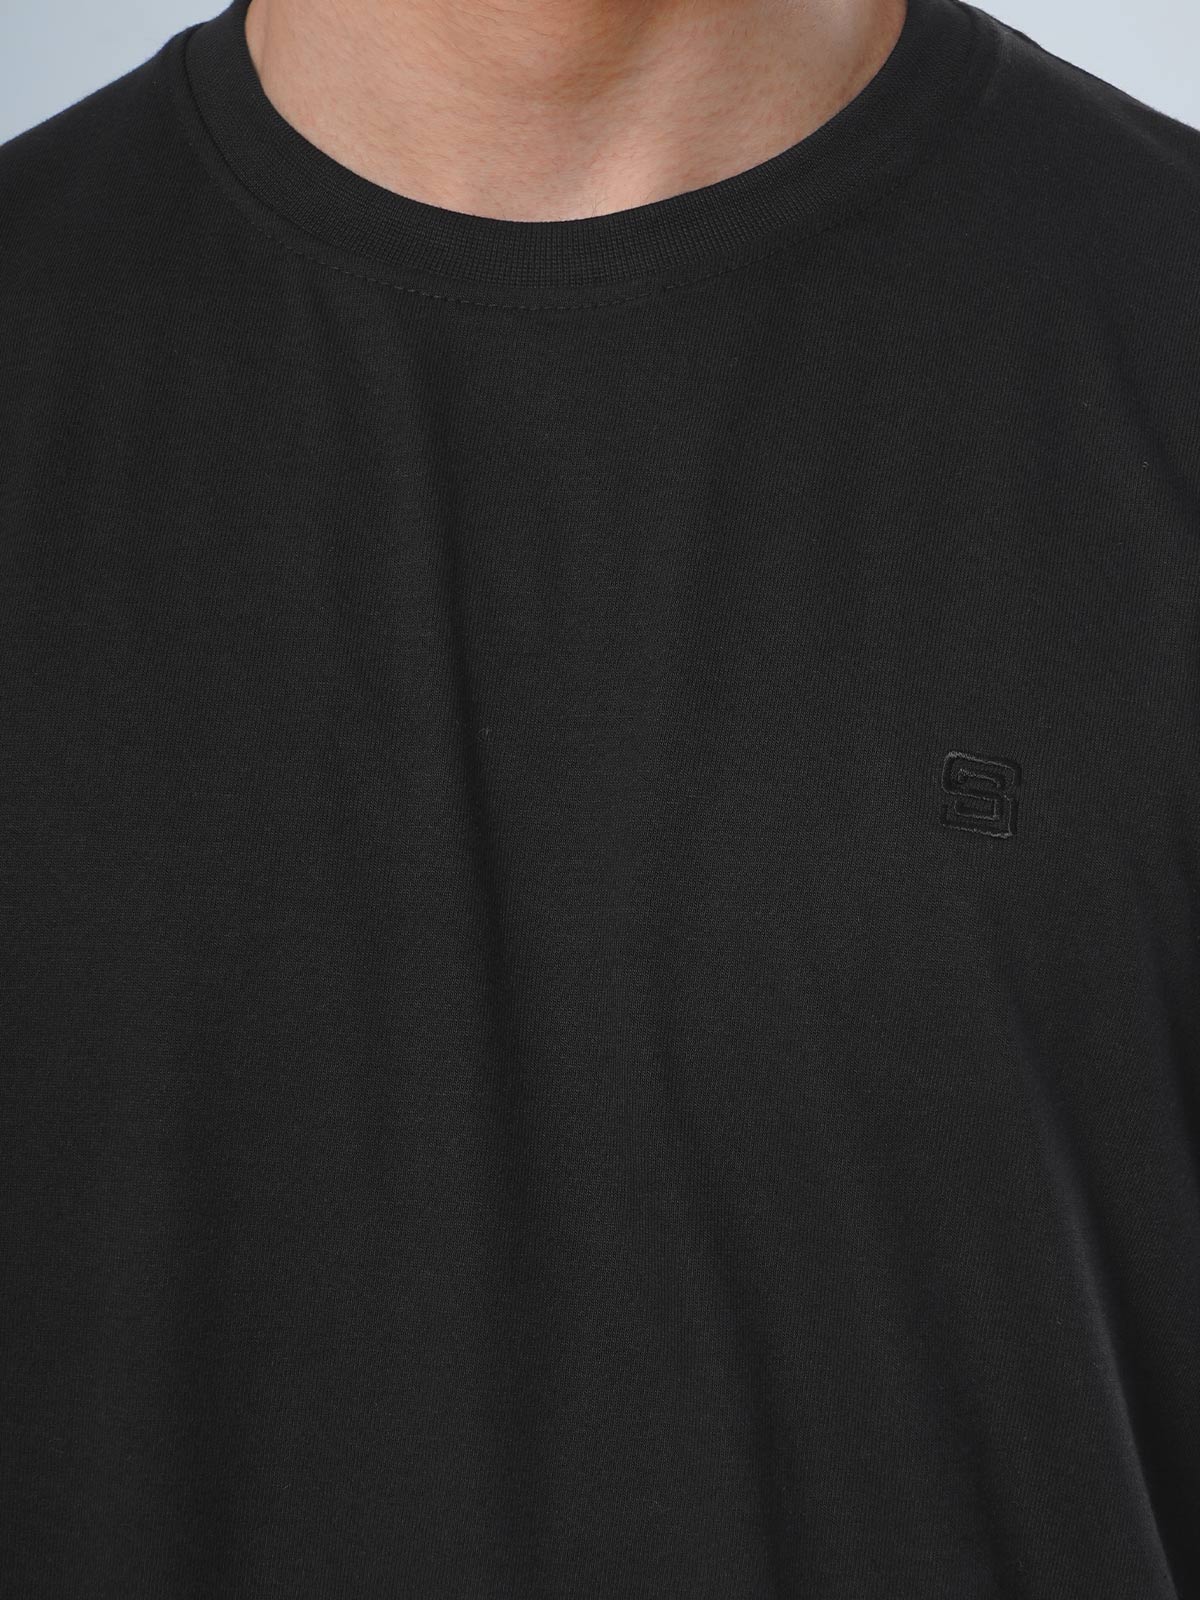 Black Plain Half Sleeves Men’s Round Neck T-Shirt (ss-02TS)